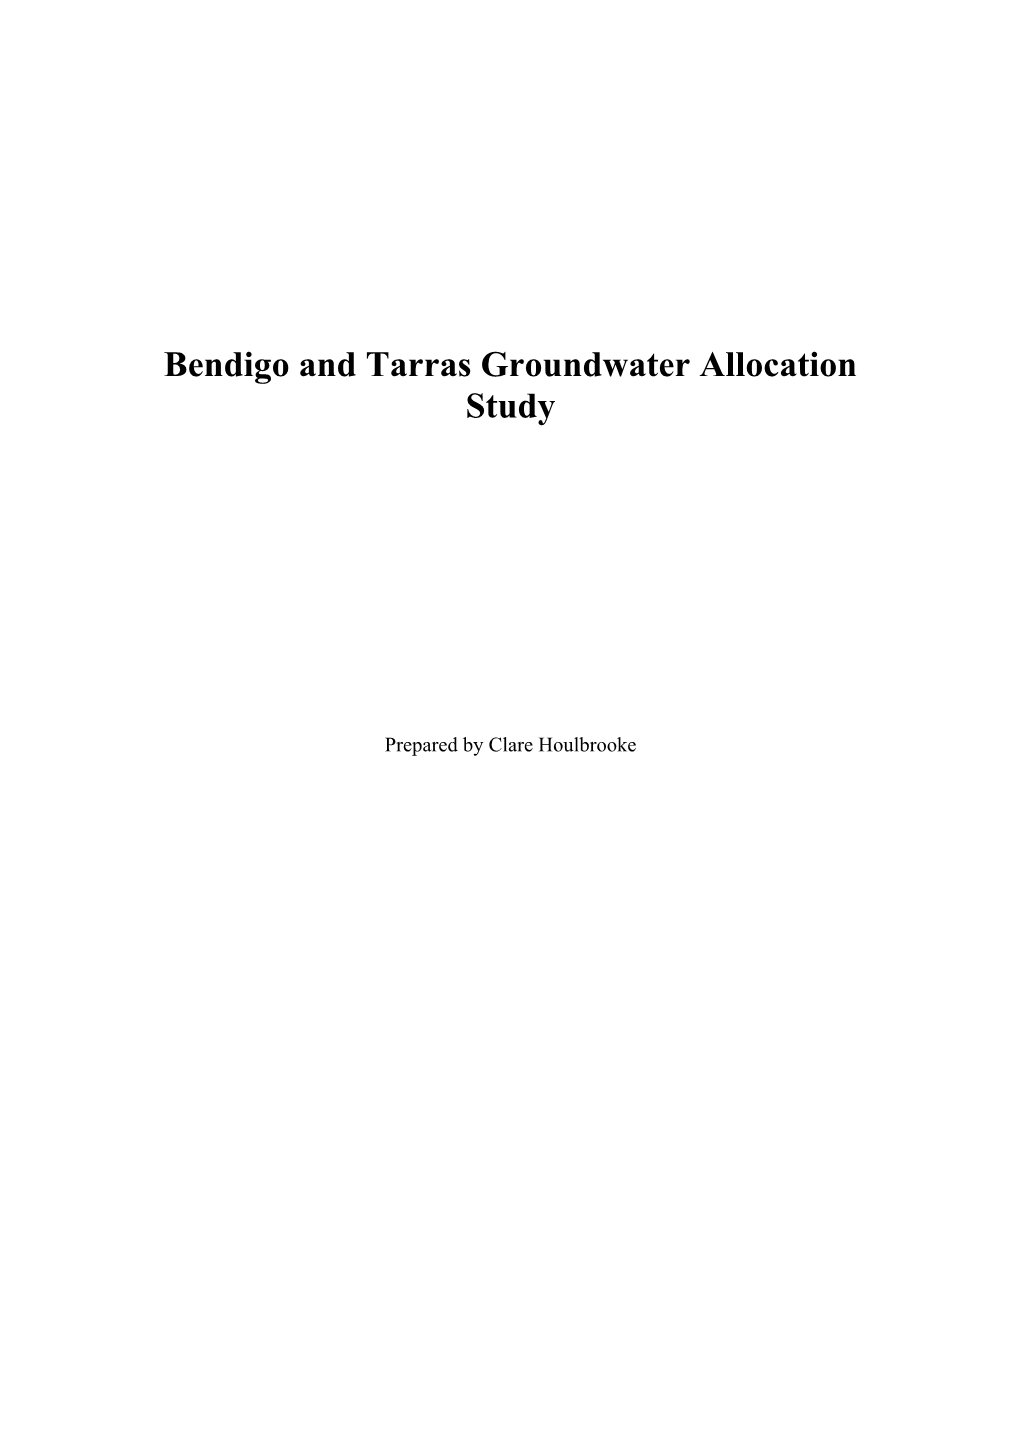 Bendigo and Tarras Groundwater Allocation Study